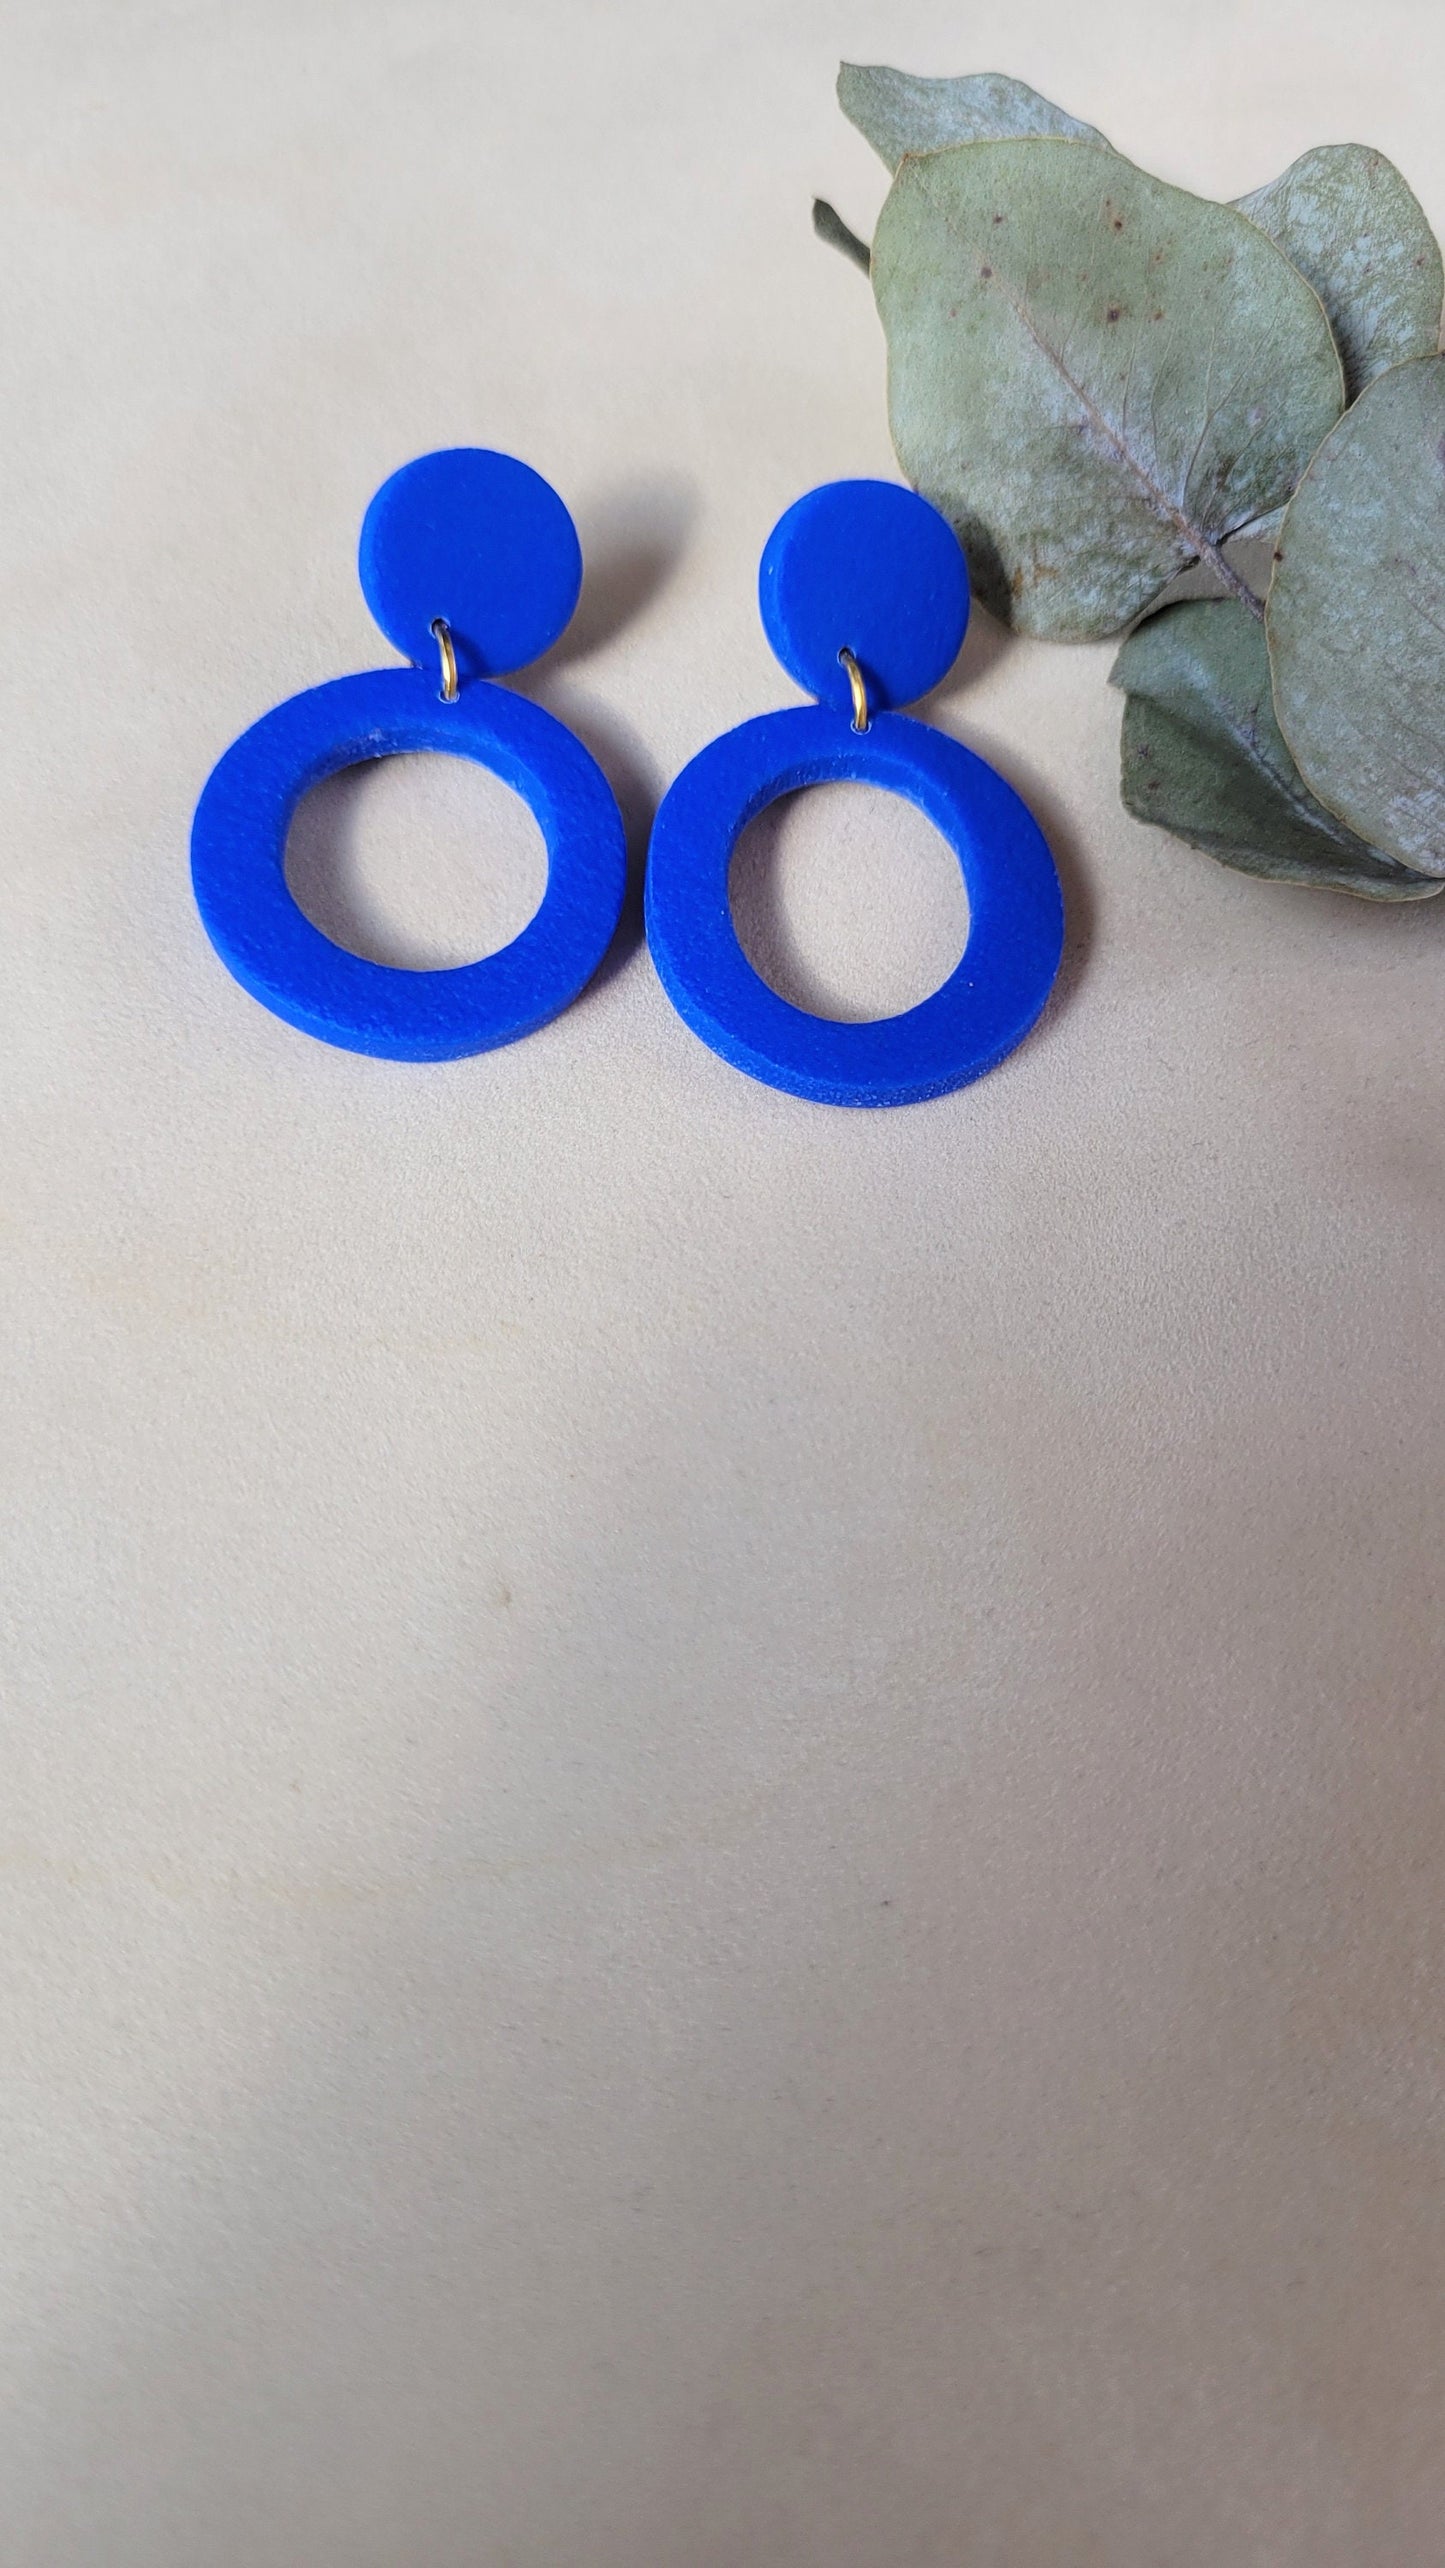 Hängende Ohrringe in Blau